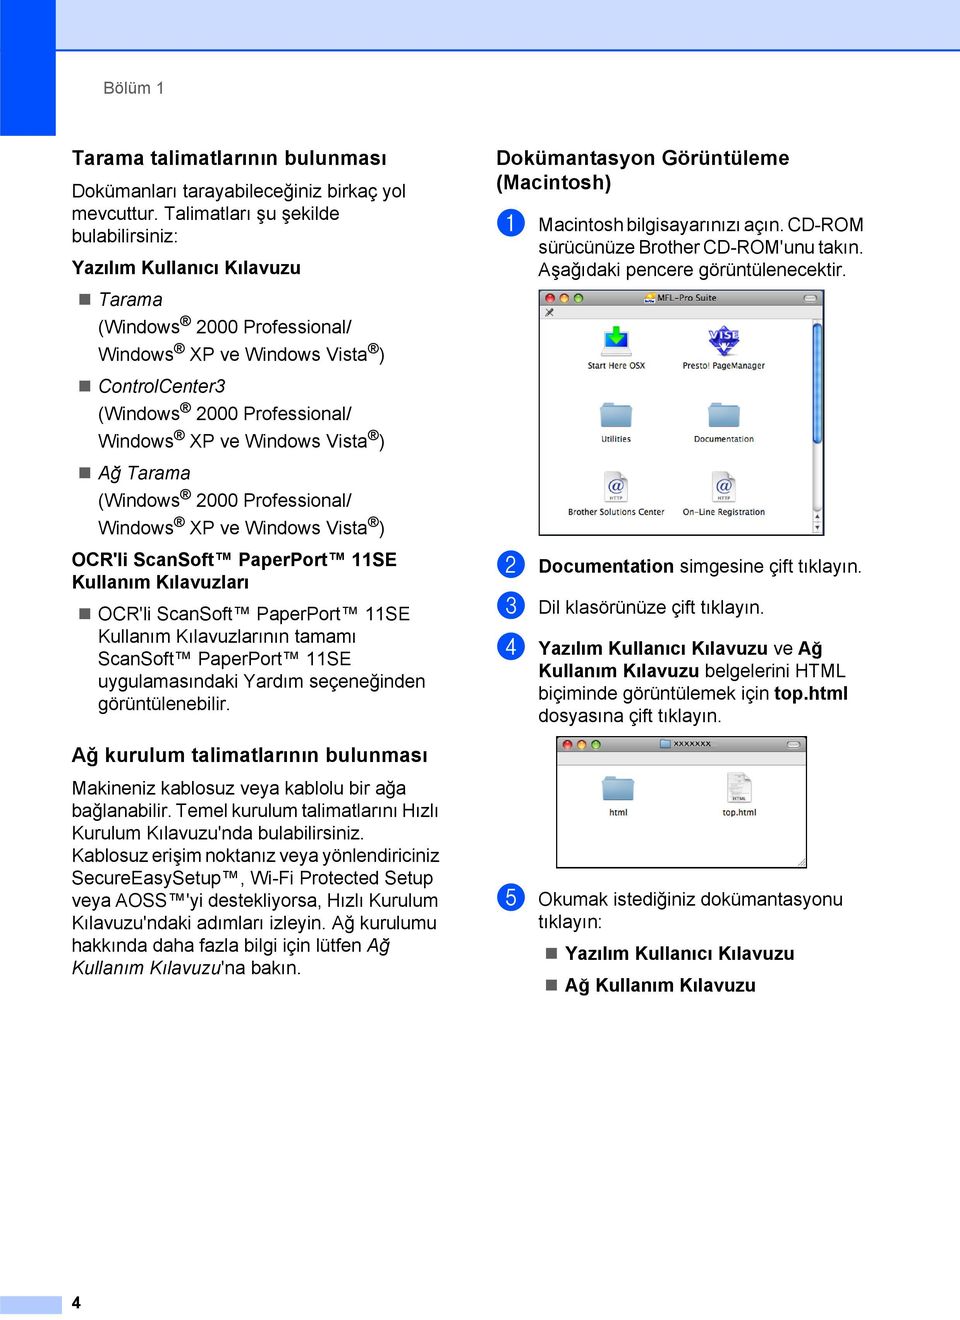 Vista ) Ağ Tarama (Windows 2000 Professional/ Windows XP ve Windows Vista ) OCR'li ScanSoft PaperPort 11SE Kullanım Kılavuzları OCR'li ScanSoft PaperPort 11SE Kullanım Kılavuzlarının tamamı ScanSoft